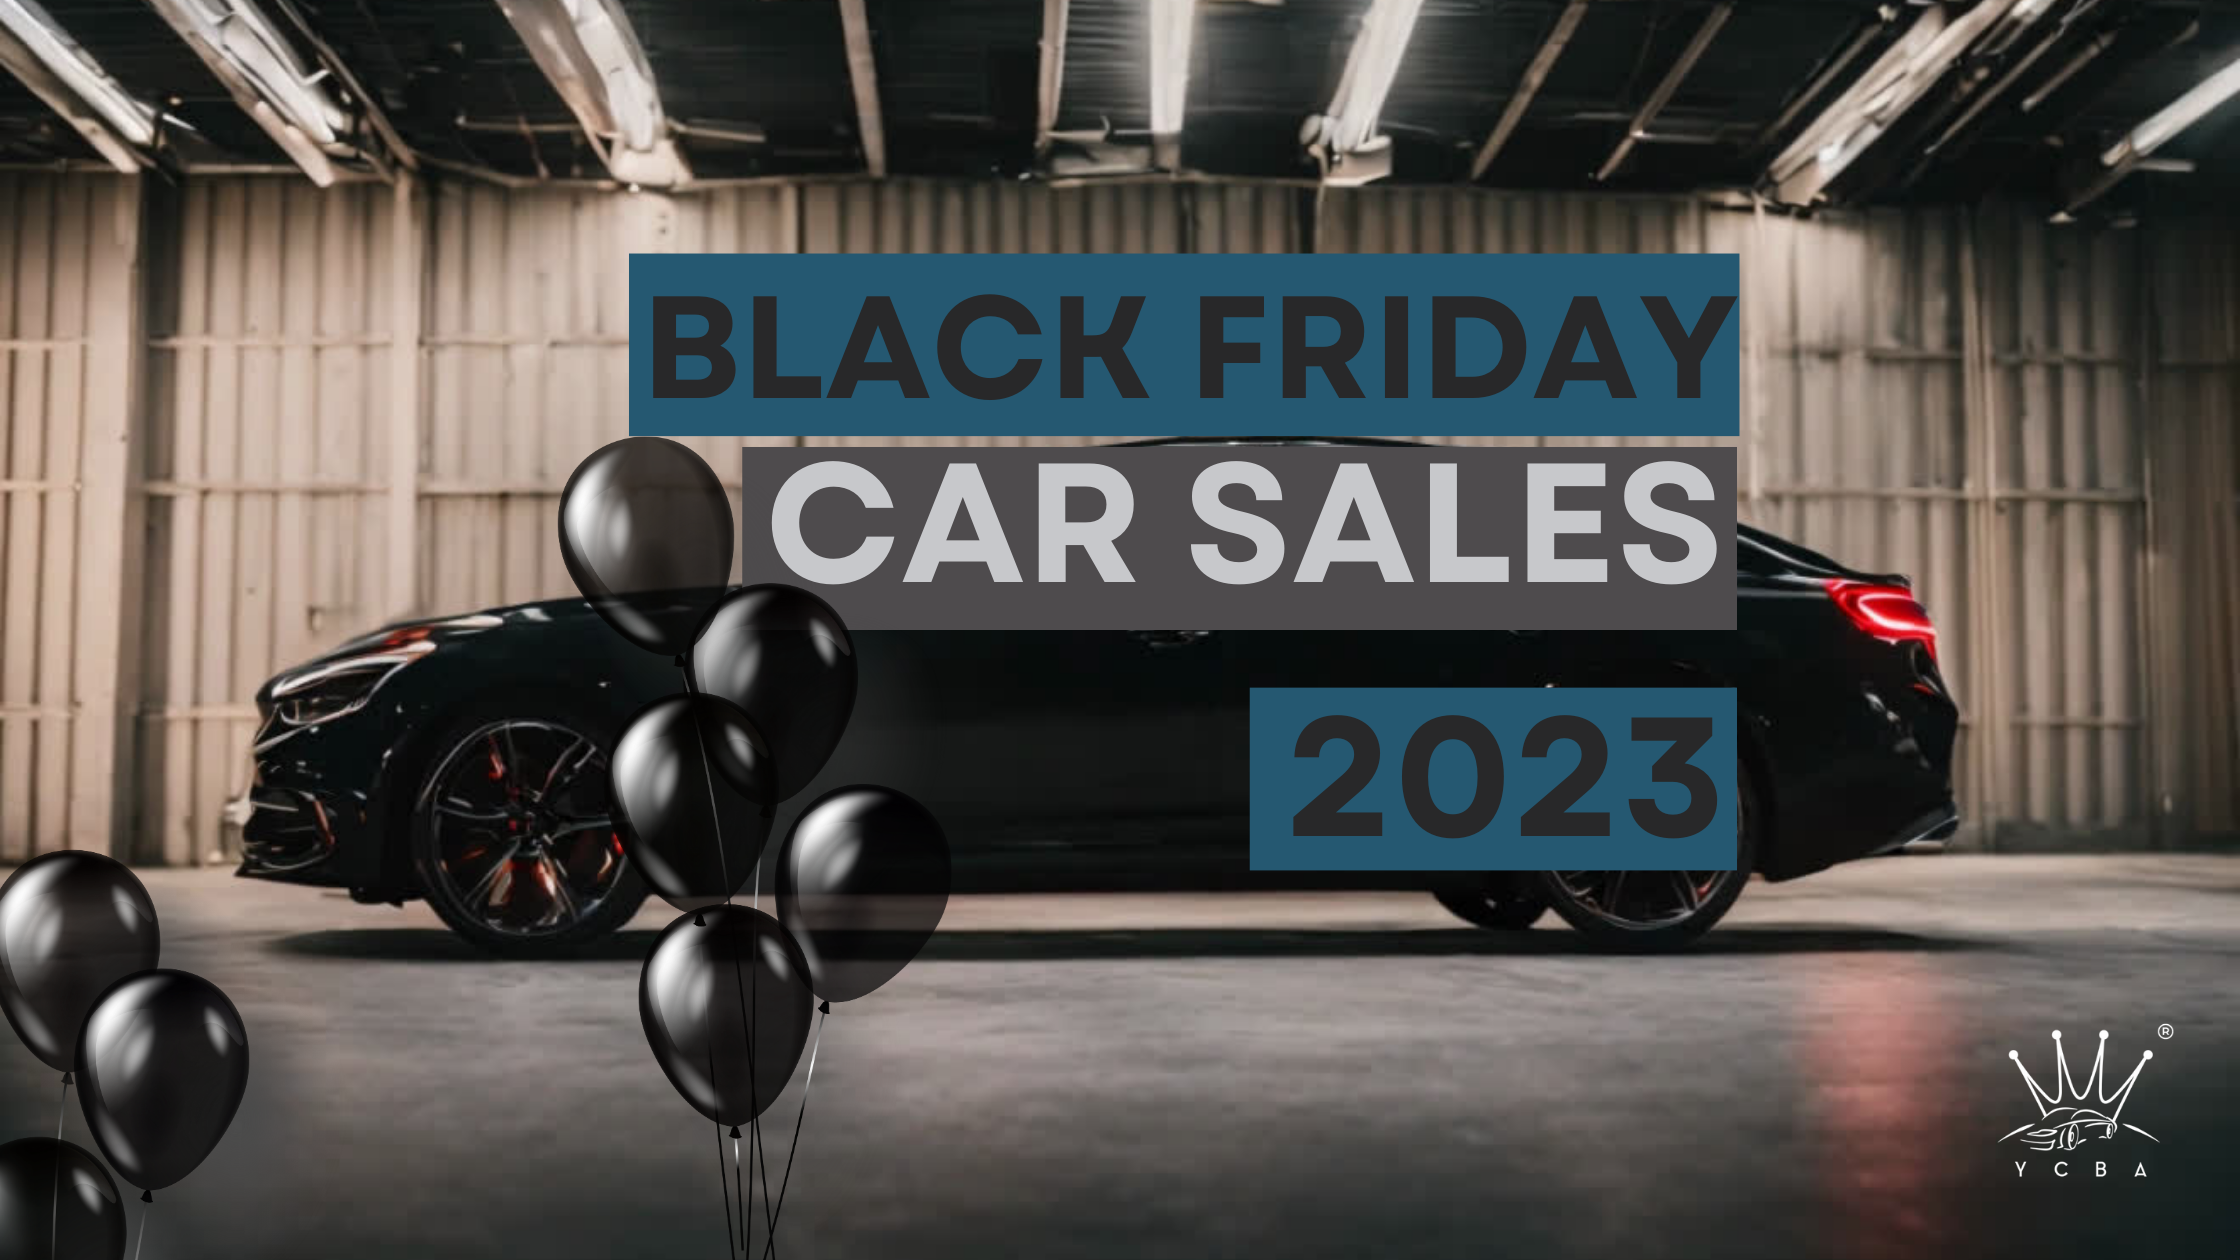 Black Friday Car Sales 2023